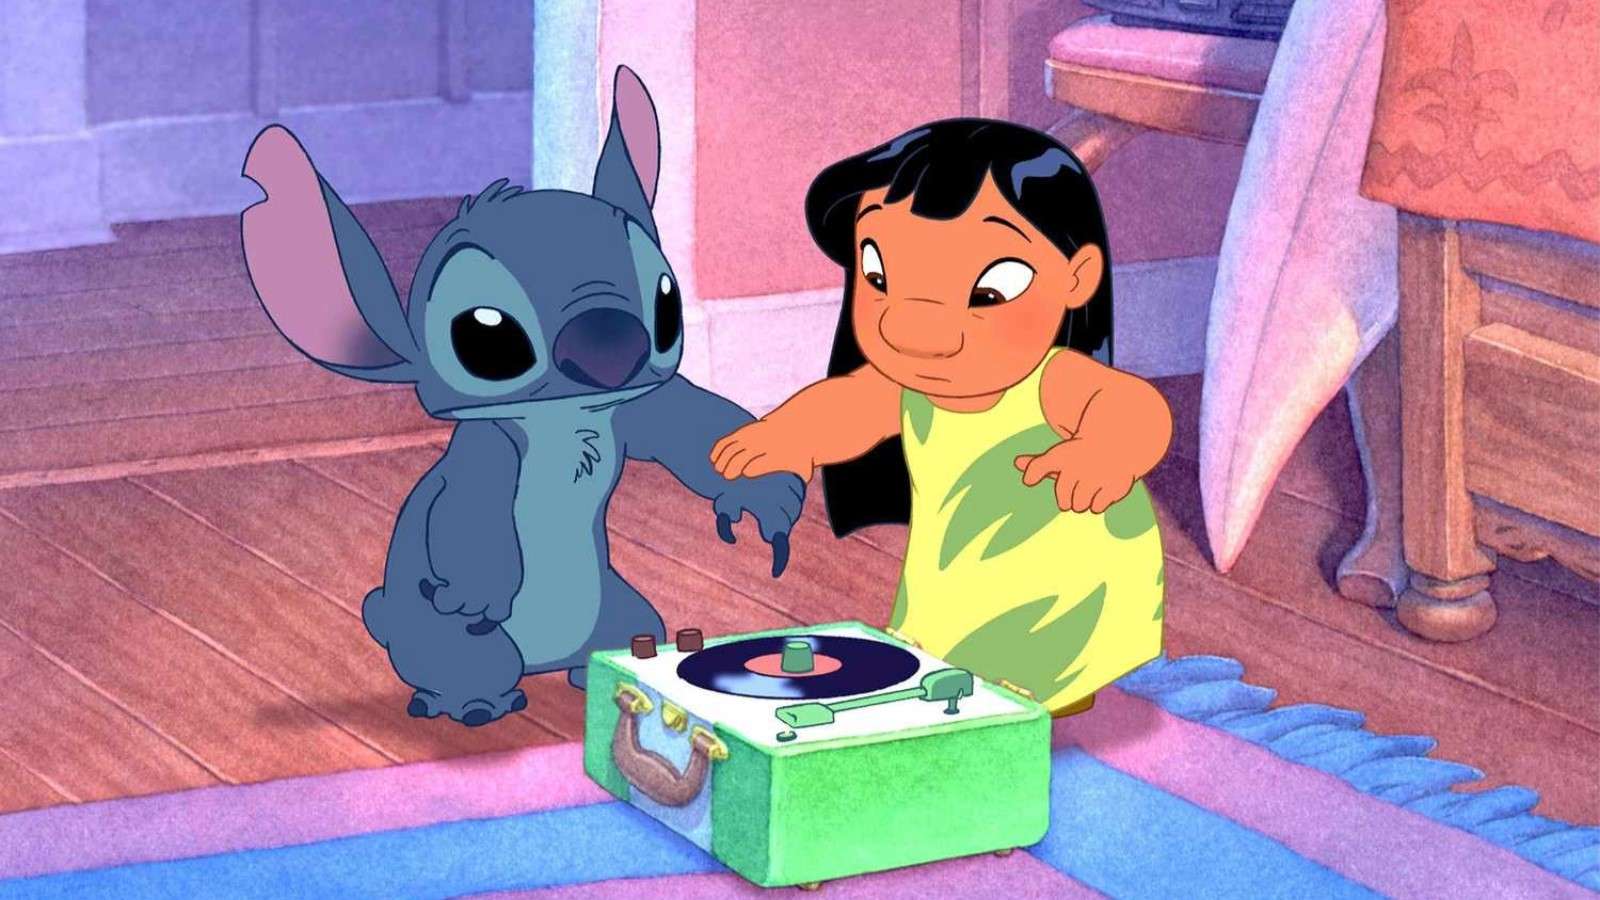 Lilo and Stitch: Lilo holding Stitch's hand over a record player